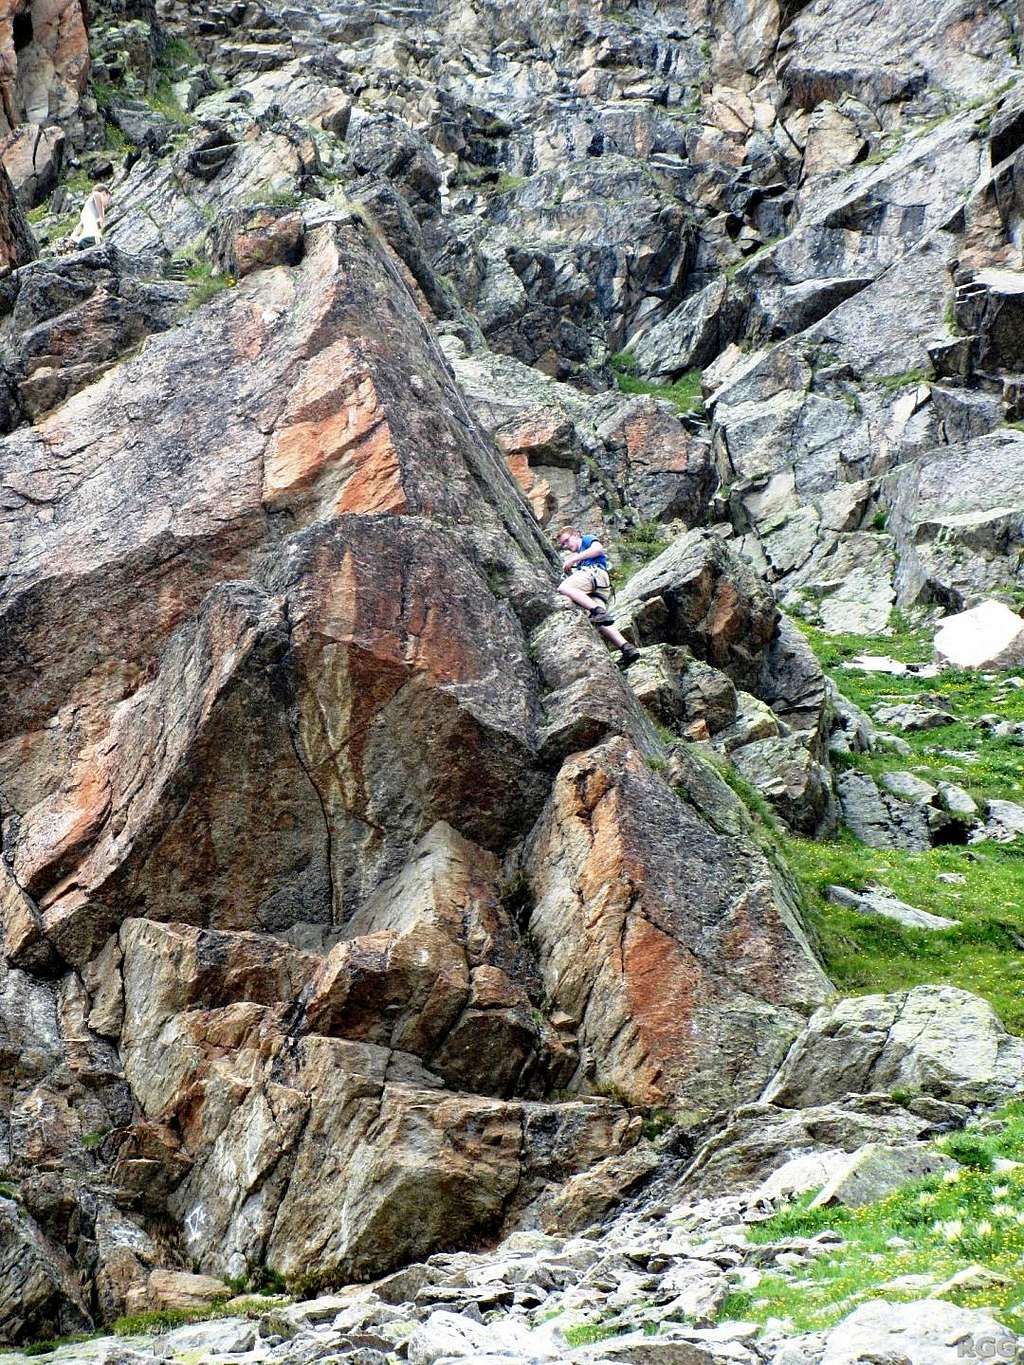 Rock climbing practice at the base of Kleinlitzner